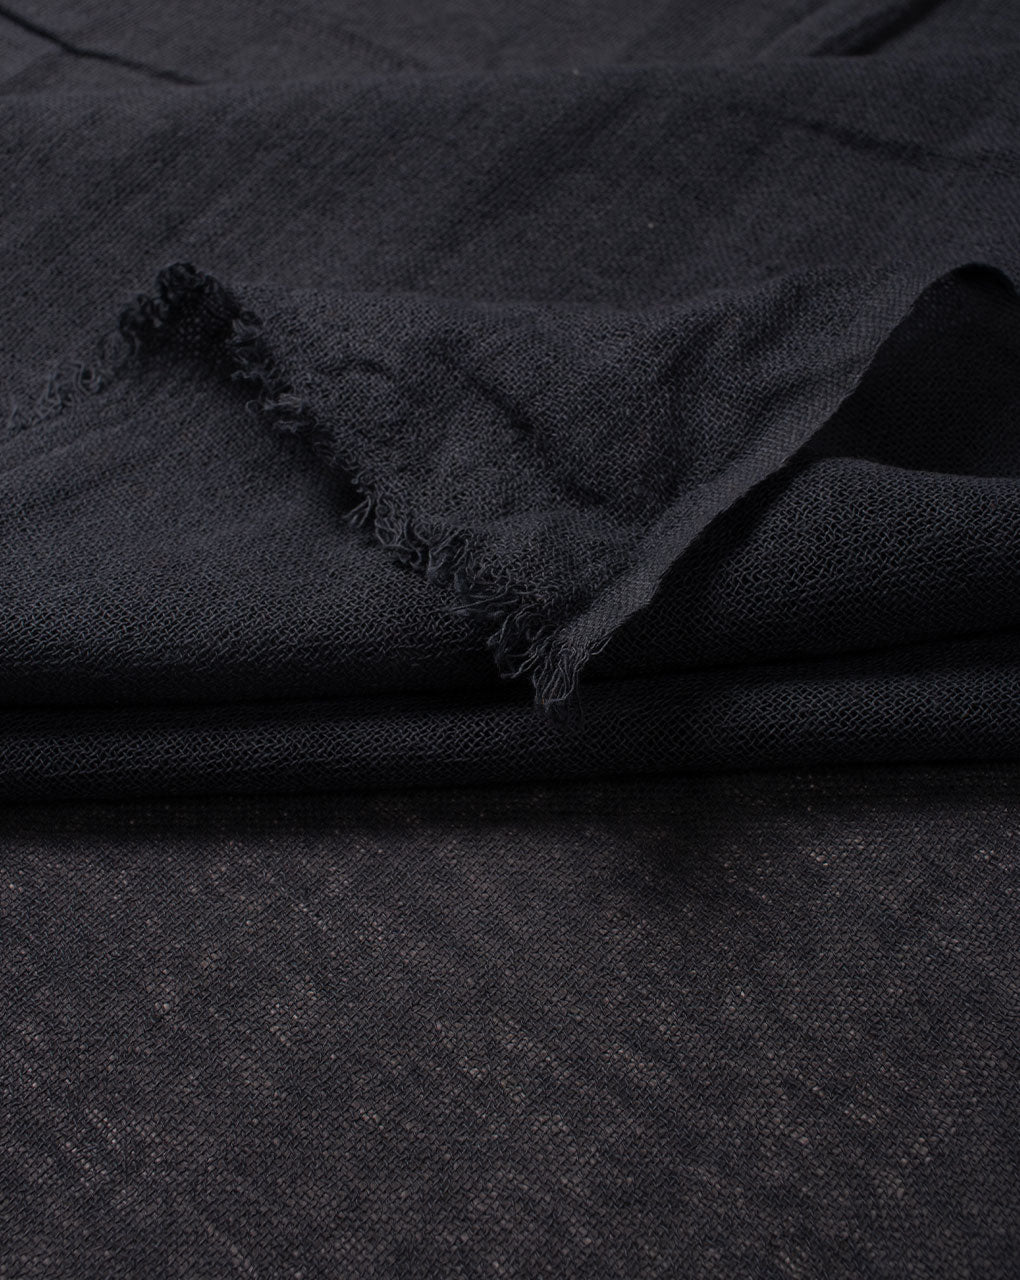 Charcoal Grey Plain Woven Bhagalpuri Cotton Stole - Fabriclore.com